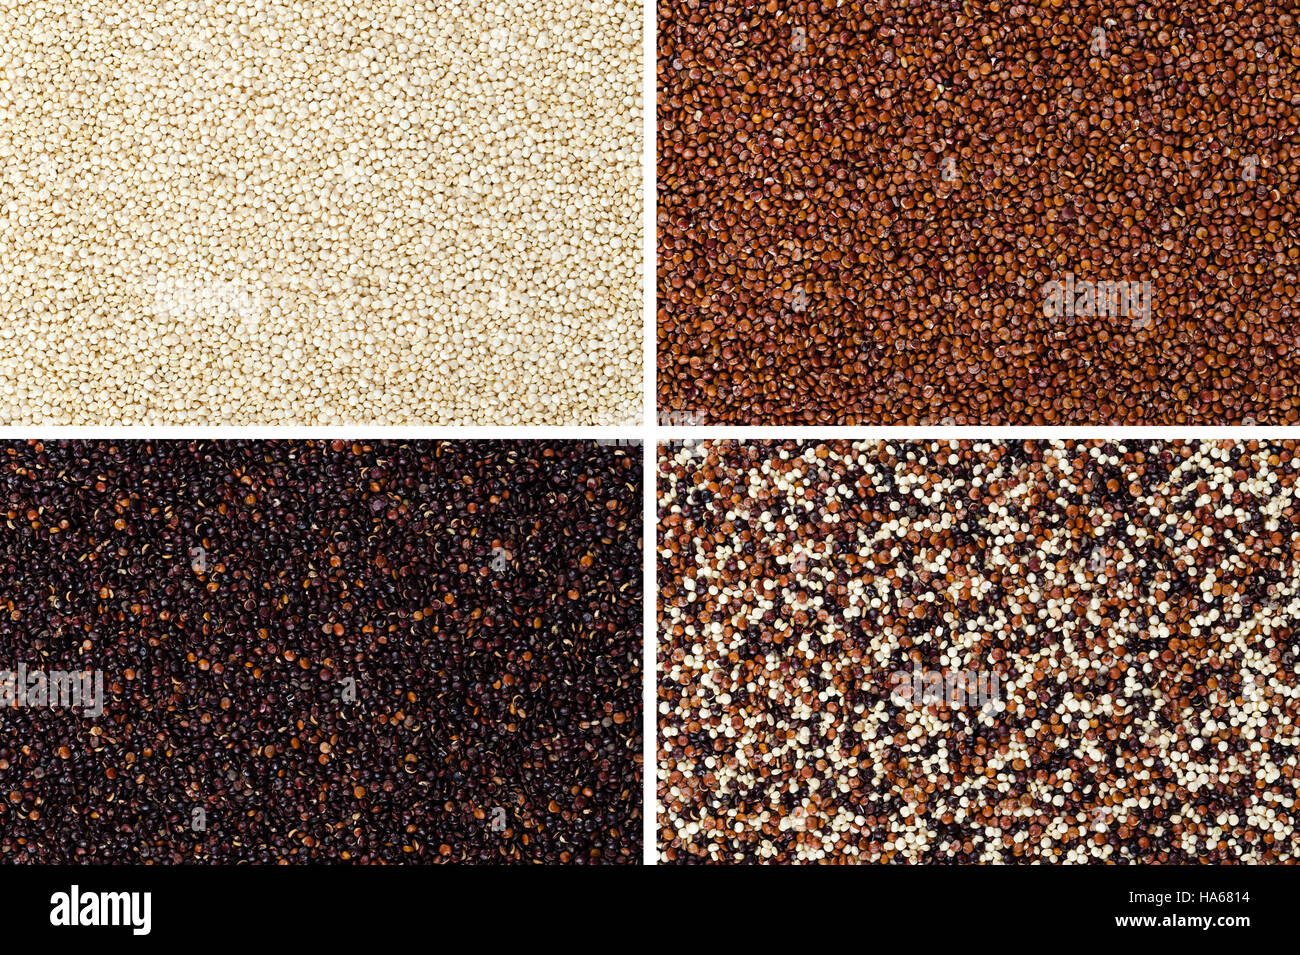 Yellow, red, black and mixed quinoa seeds rectangular surfaces. Edible fruits of grain crop Chenopodium quinoa. Stock Photo